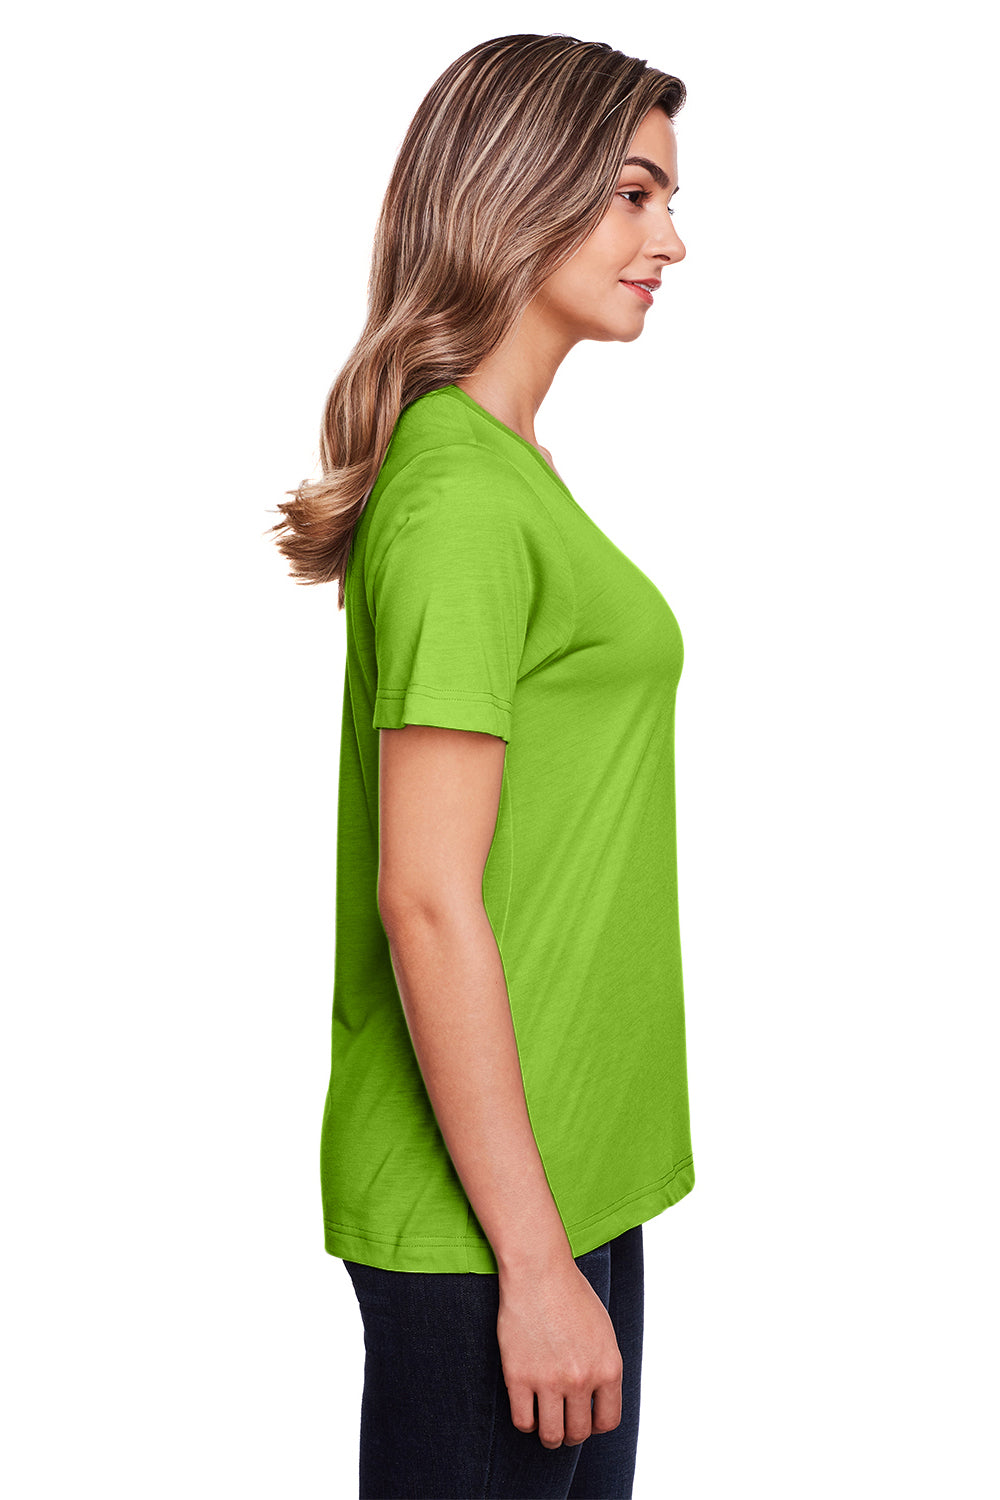 Core 365 CE111W Womens Fusion ChromaSoft Performance Moisture Wicking Short Sleeve Scoop Neck T-Shirt Acid Green Side